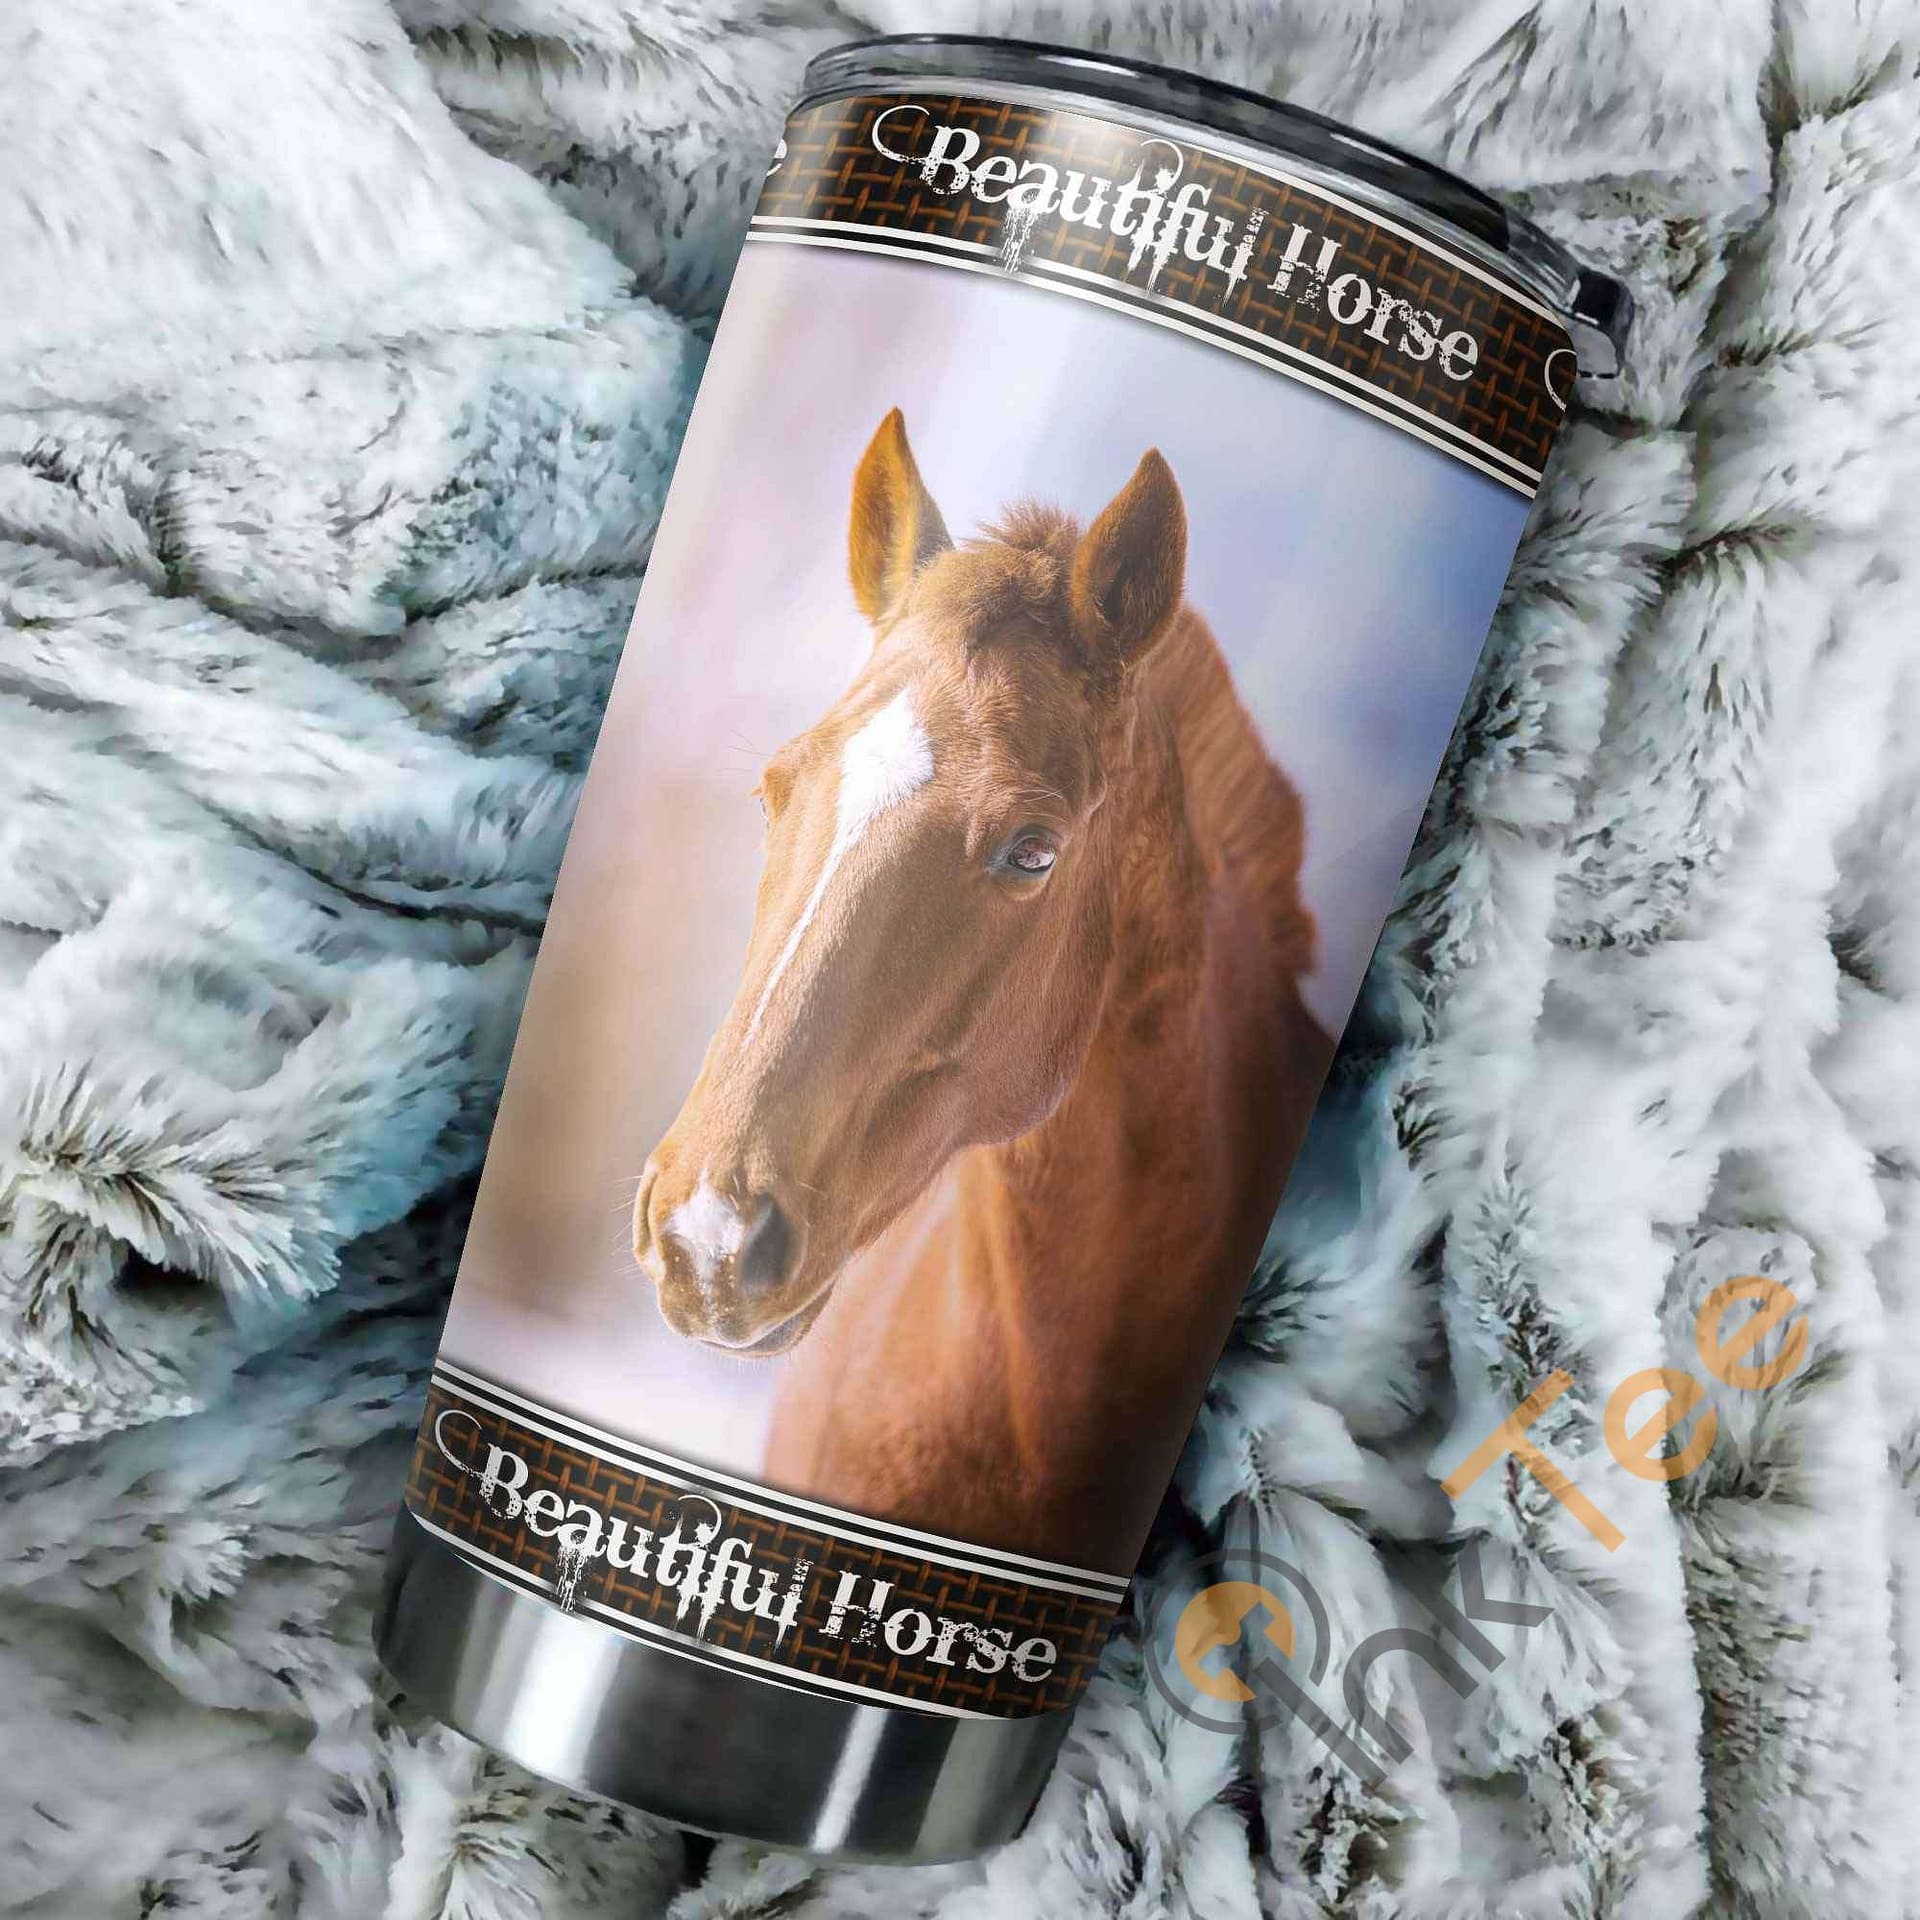 Beautiful Horse Amazon Best Seller Sku 3354 Stainless Steel Tumbler